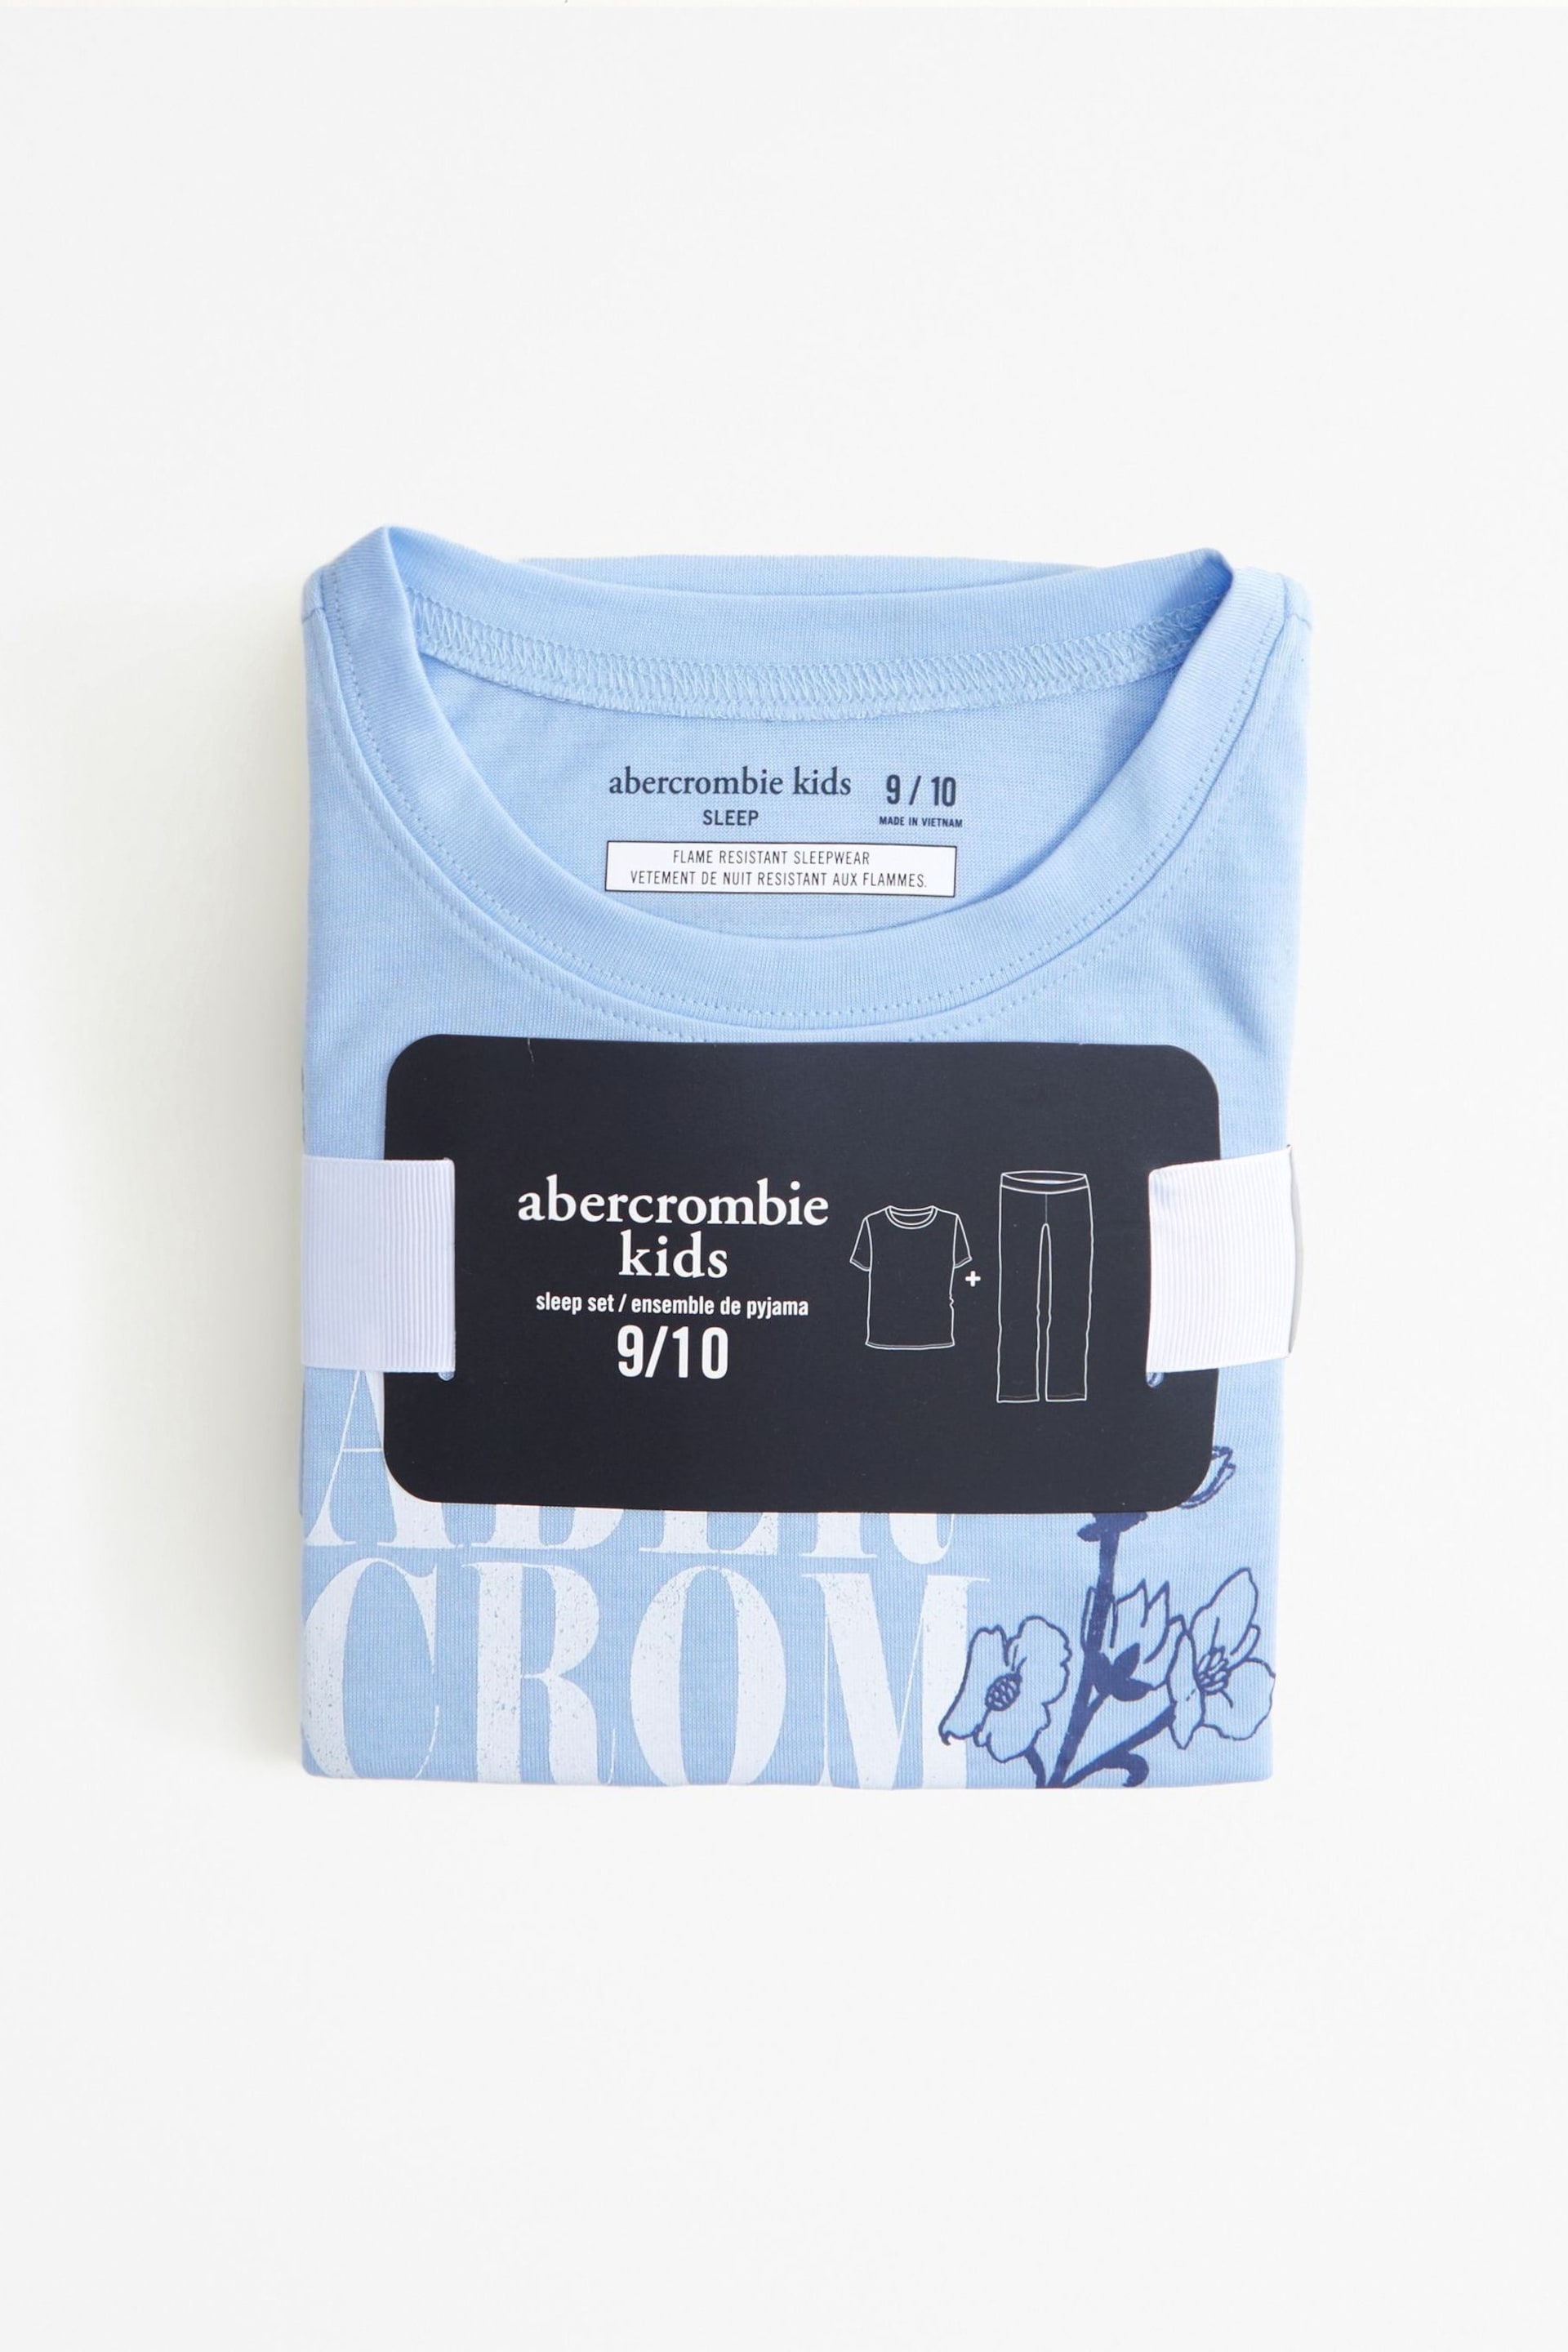 Abercrombie & Fitch Blue Gingham Logo Pyjama Set - Image 2 of 2